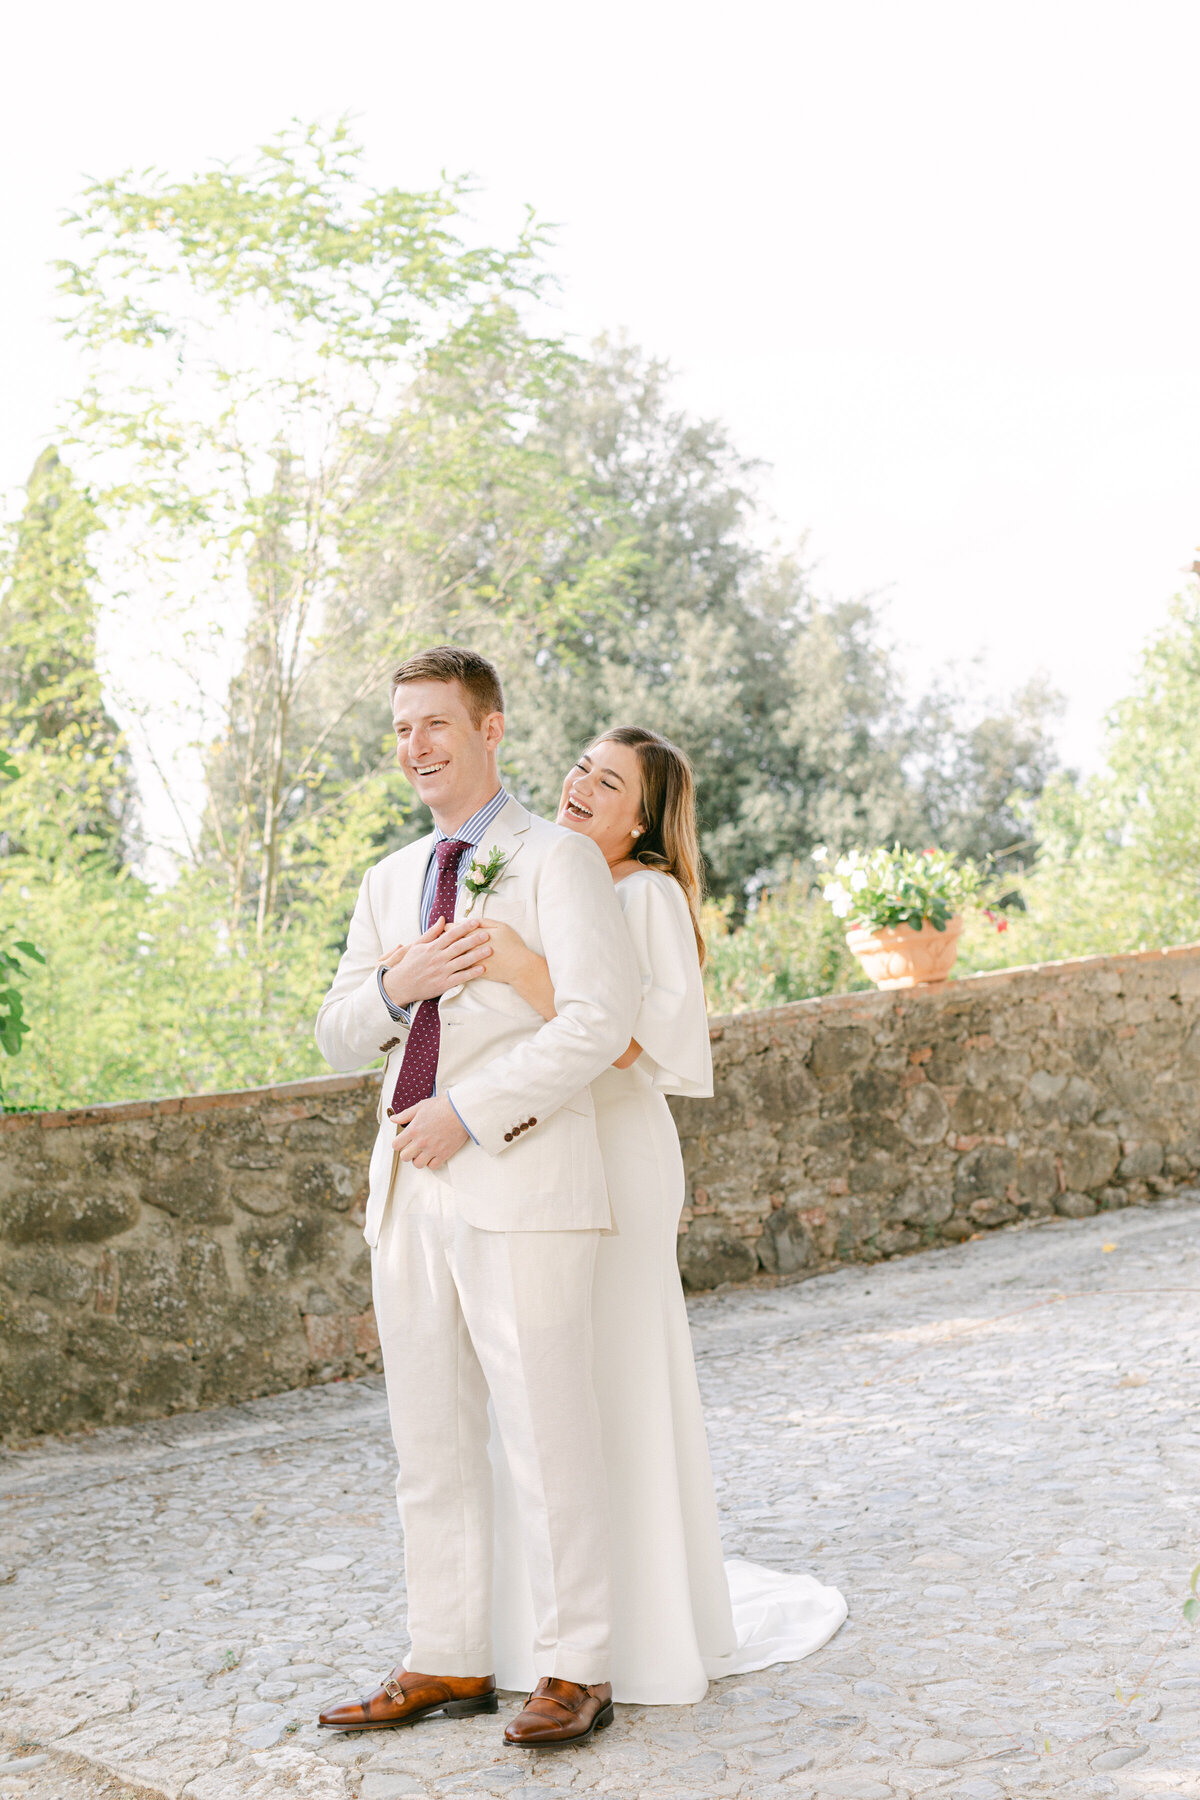 Borgo-Laticastelli-Italy-Wedding-Photographer-Ava-Vienneau-108